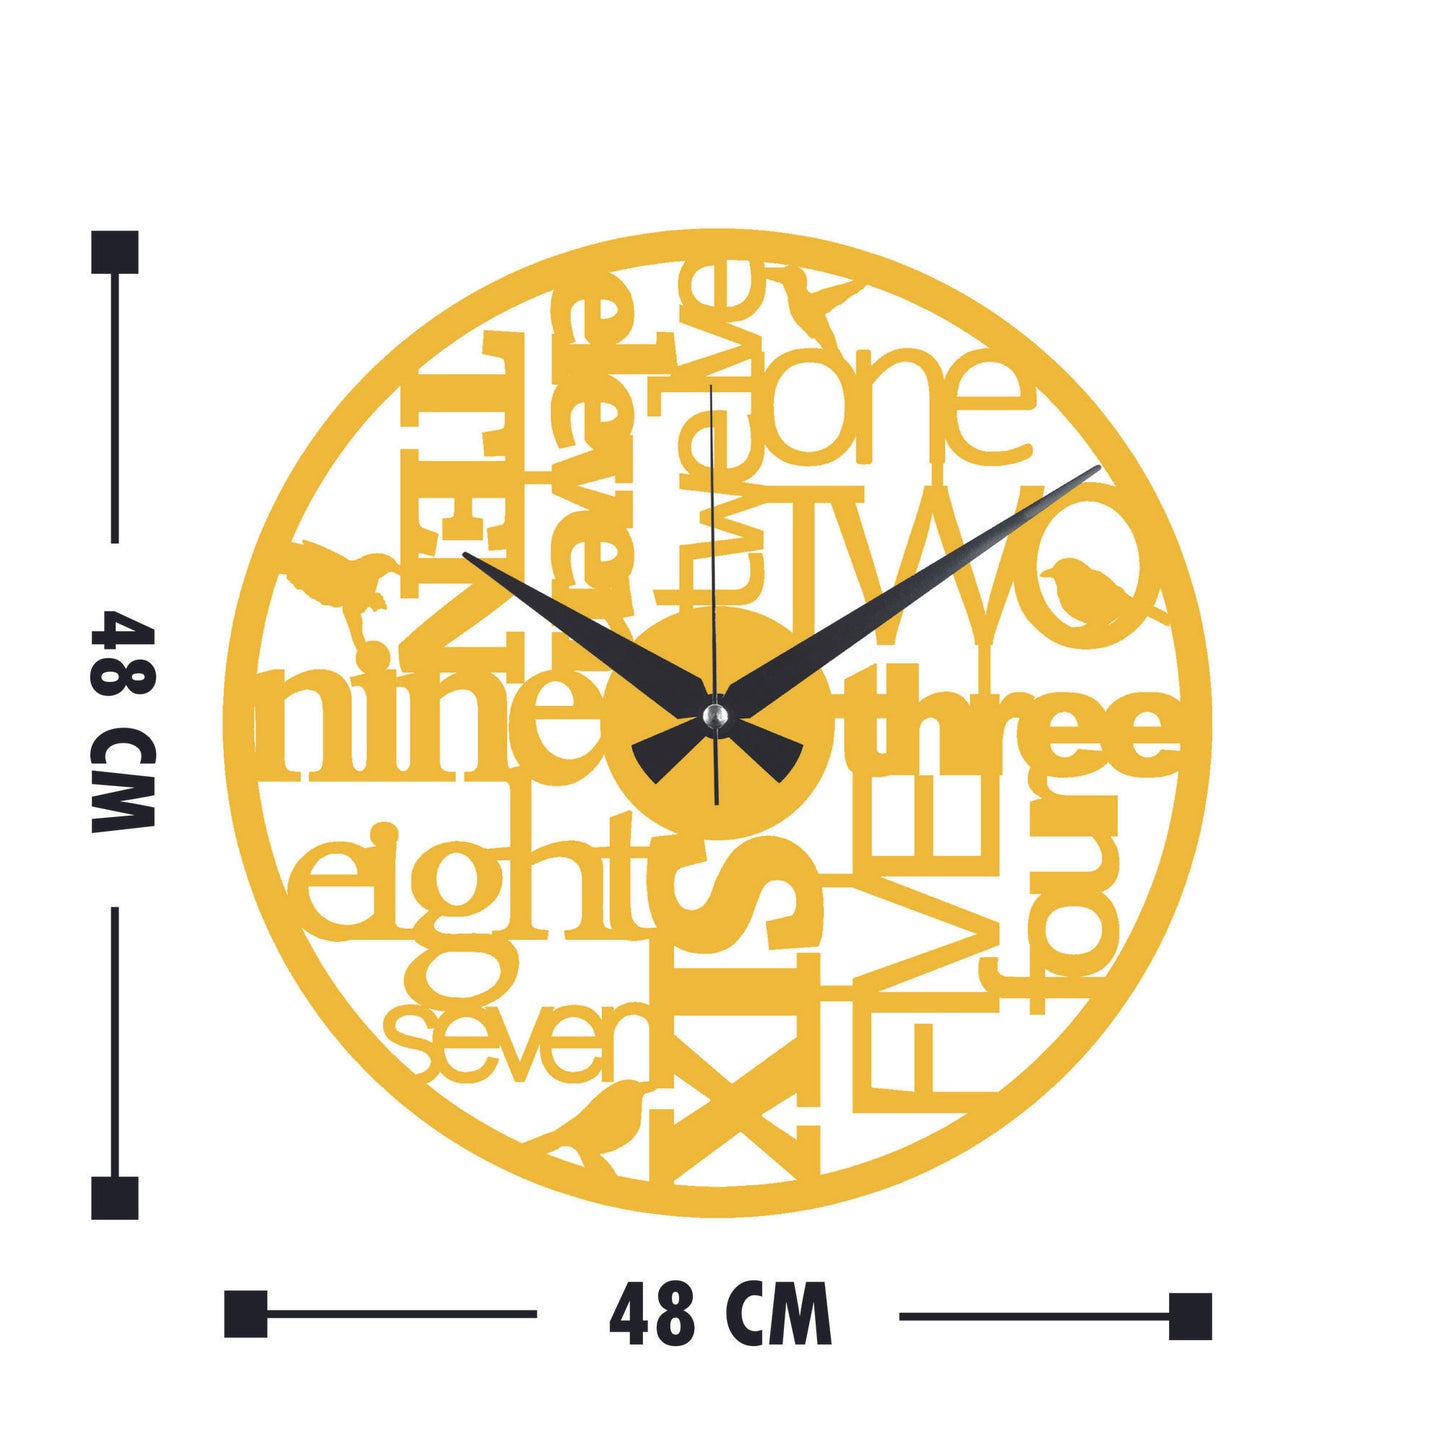 Metal Wall Clock 32 - Gold - Decorative Metal Wall Clock